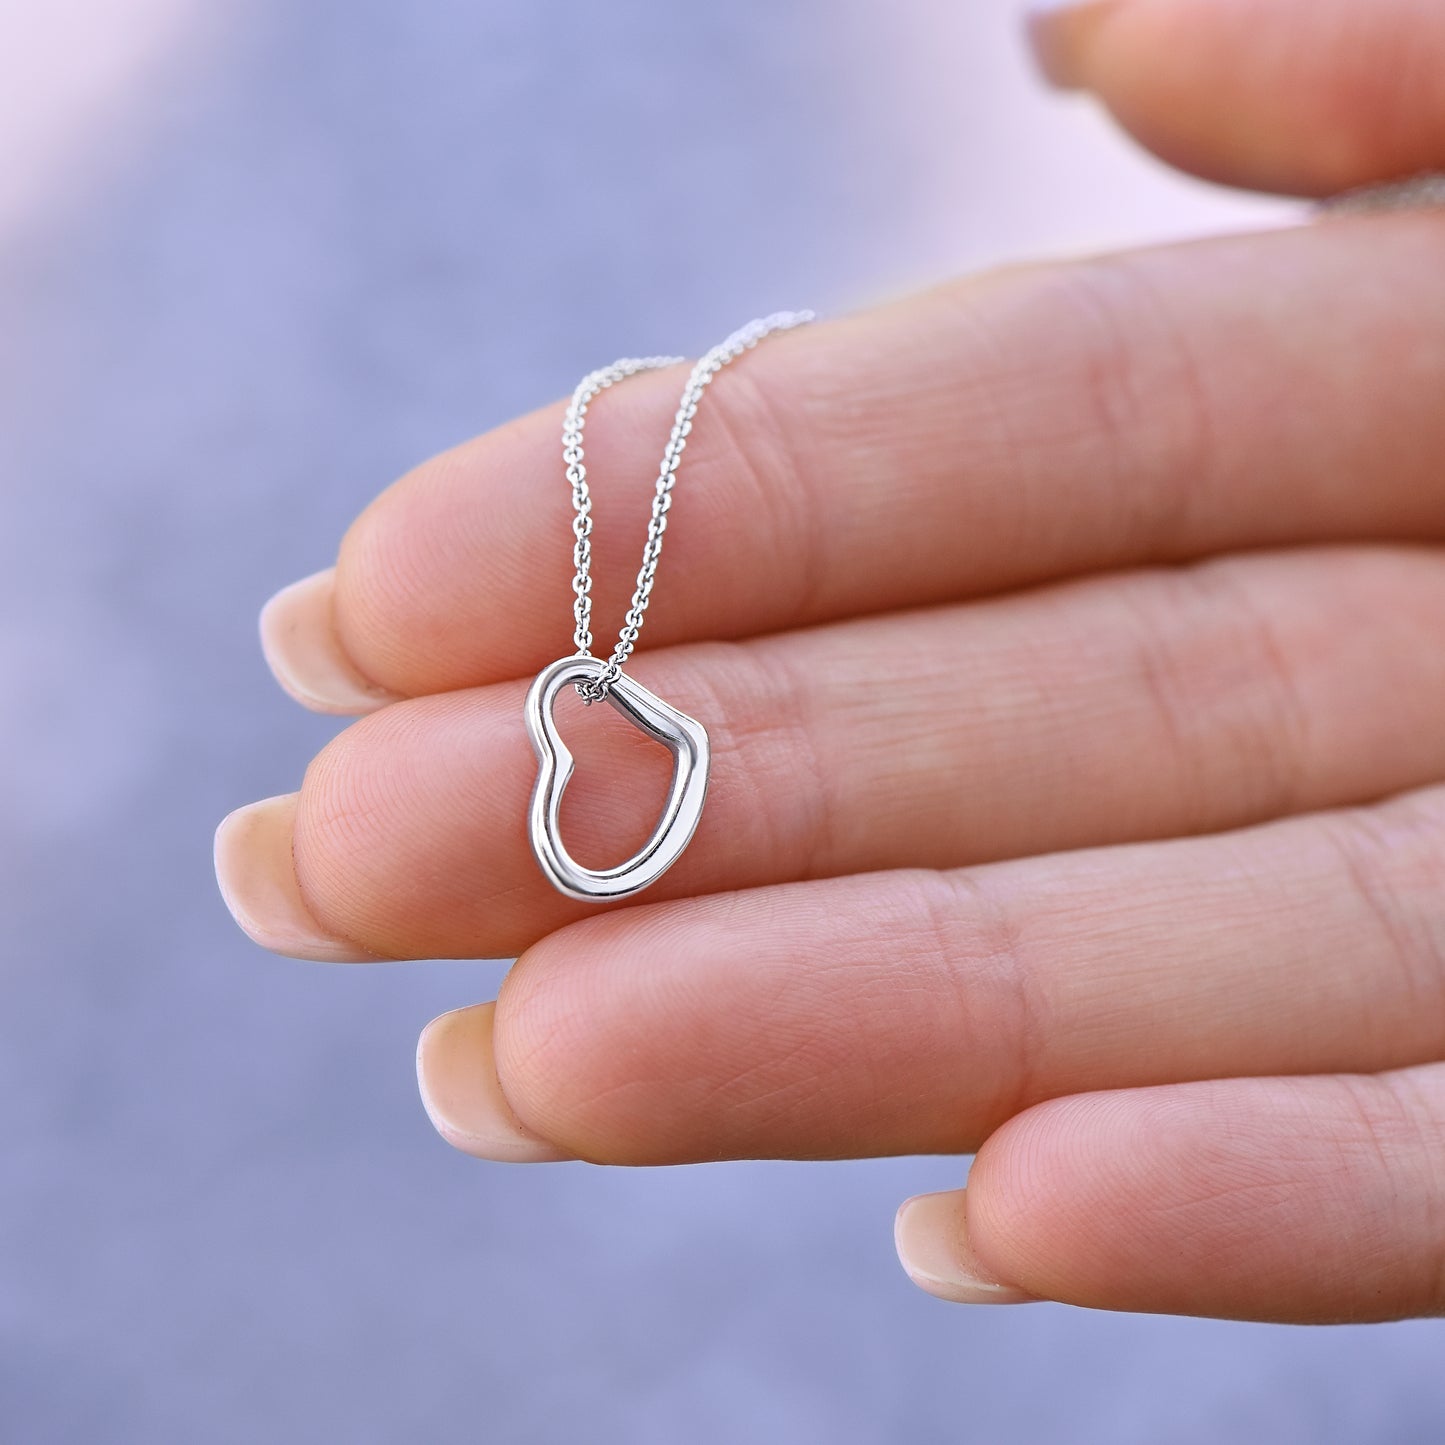 Bridesmaid Proposal Heart Necklace